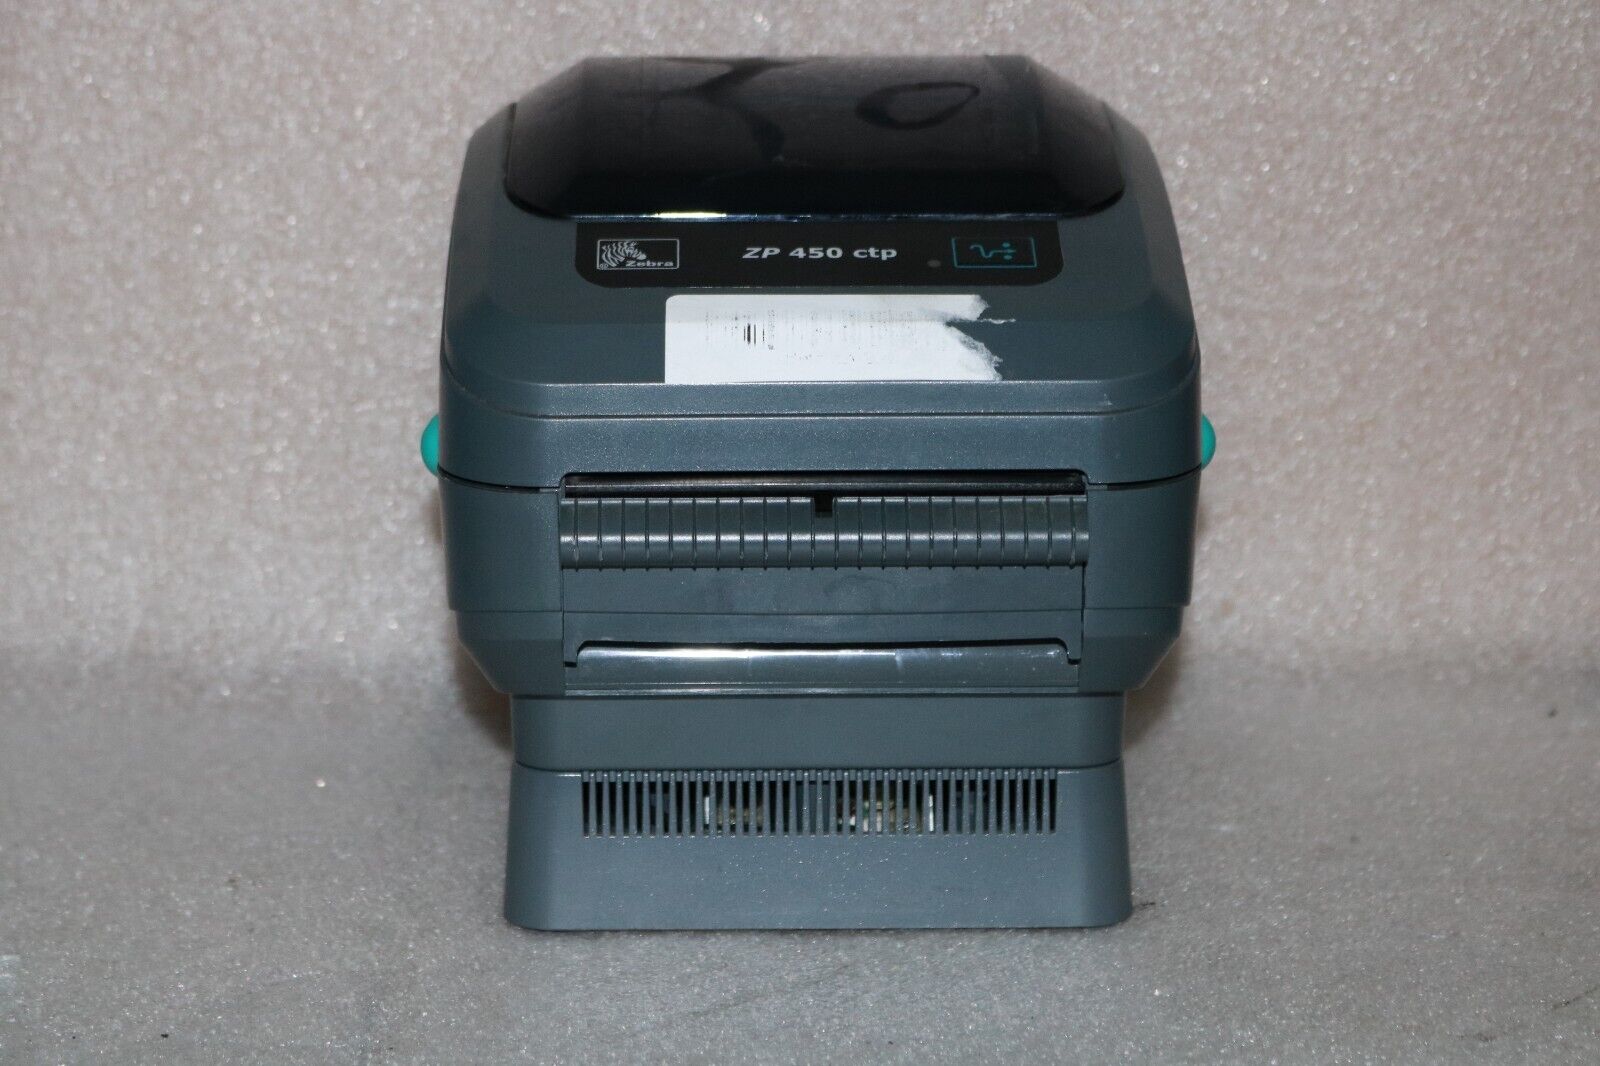 Lot of 5 Zebra ZP 450 CTP Thermal UPS Label Printer USB  ZP450-0502-0004A .